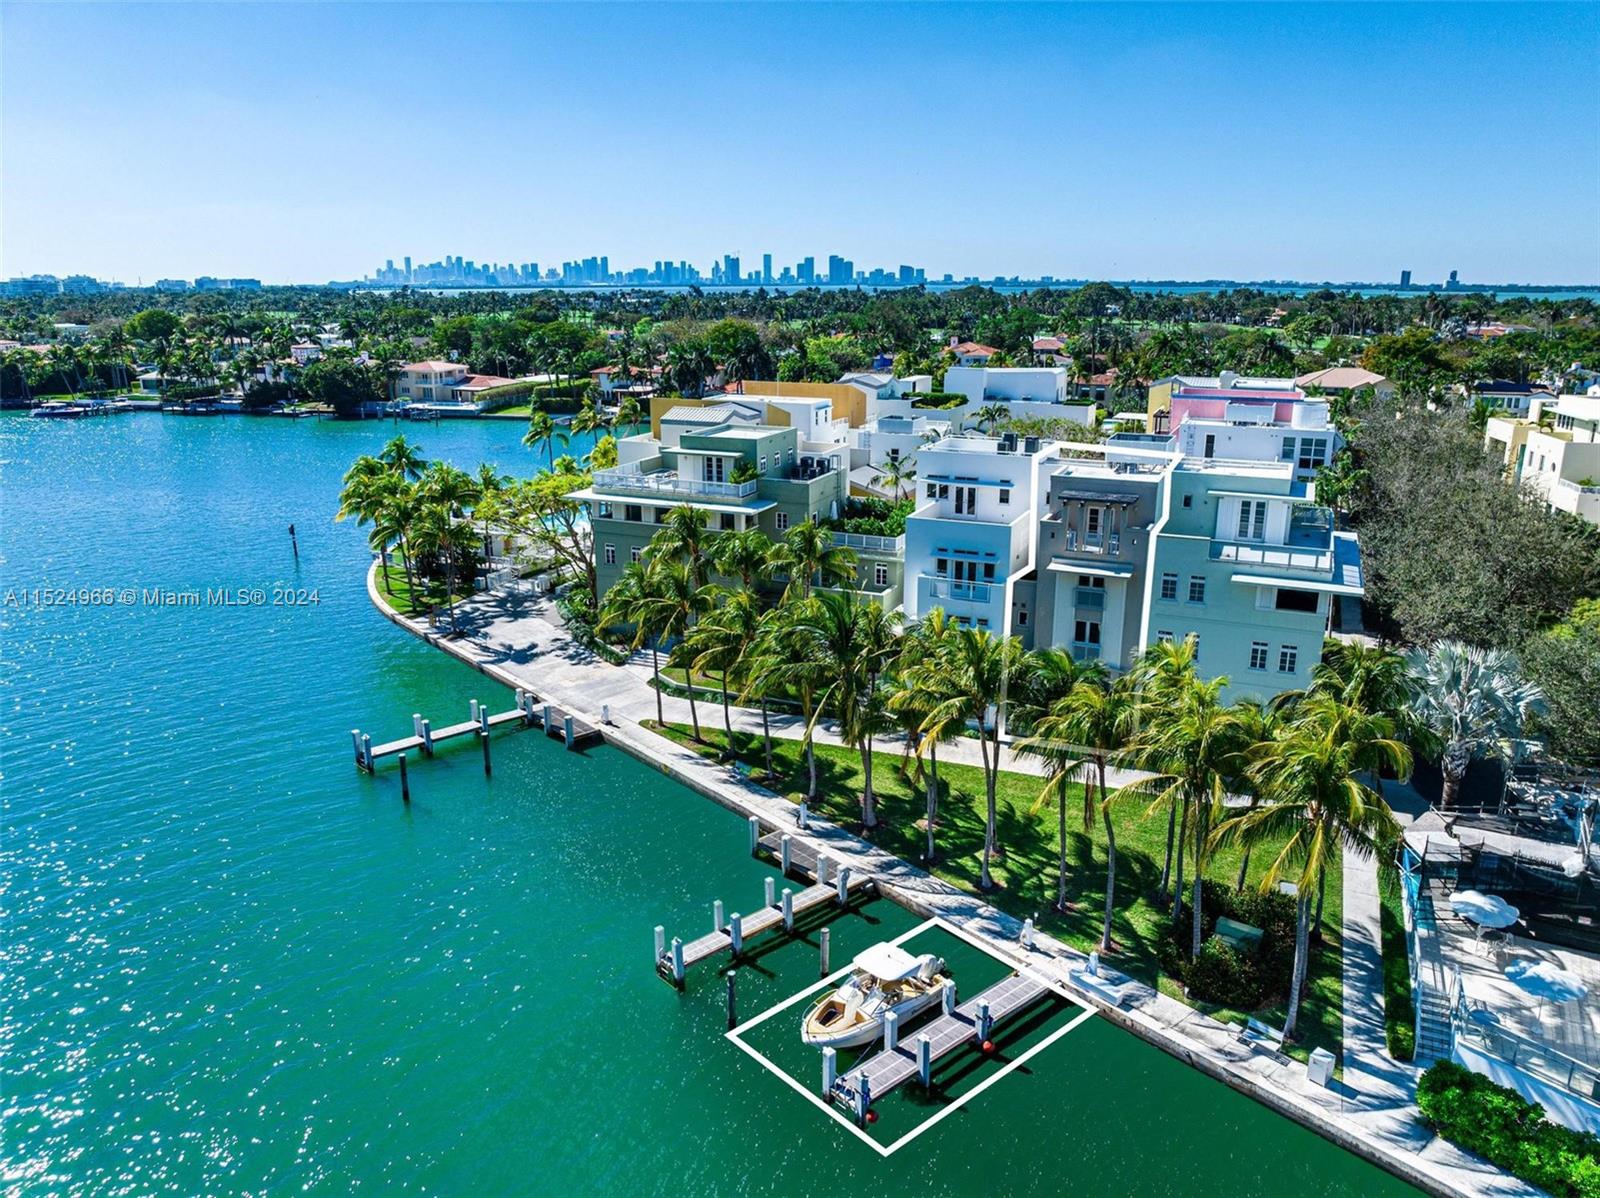 Property for Sale at 6020 Aqua Path, Miami Beach, Miami-Dade County, Florida - Bedrooms: 4 
Bathrooms: 6  - $4,395,000